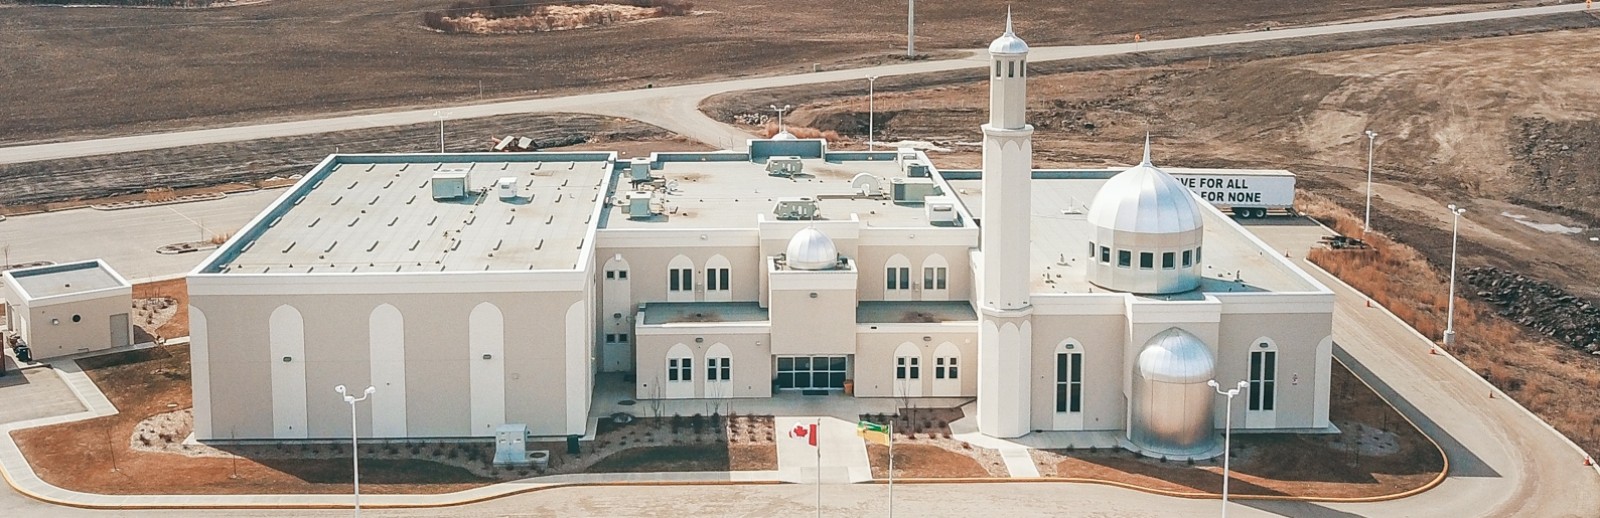 Mosque Photos (9) - website